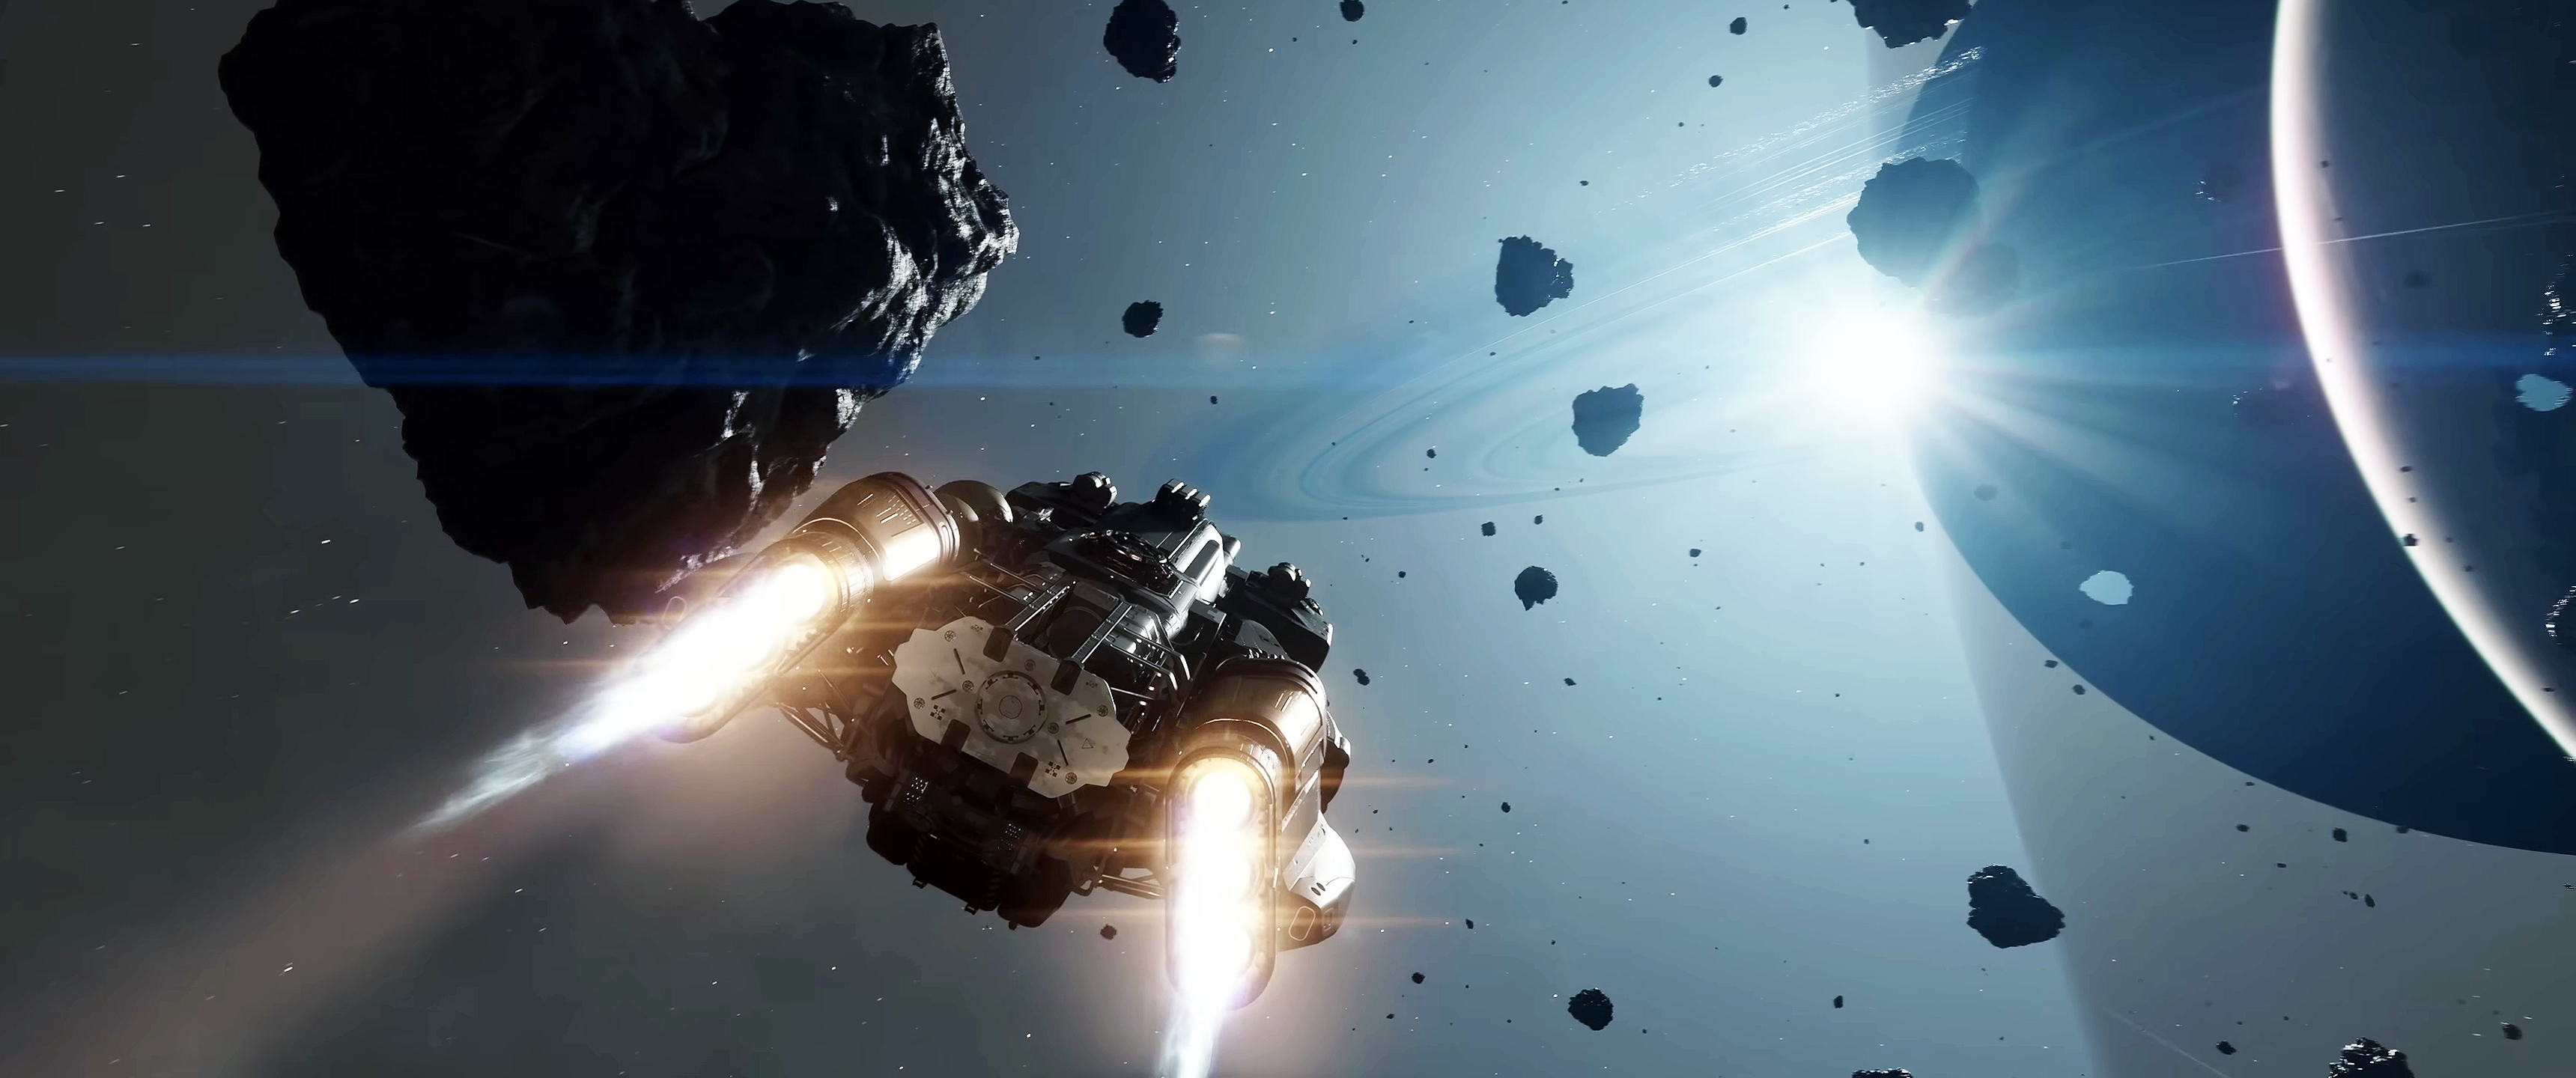 Starfield Bethesda Softworks Space Video Games Spaceship Stars Asteroid Planet CGi 3440x1440